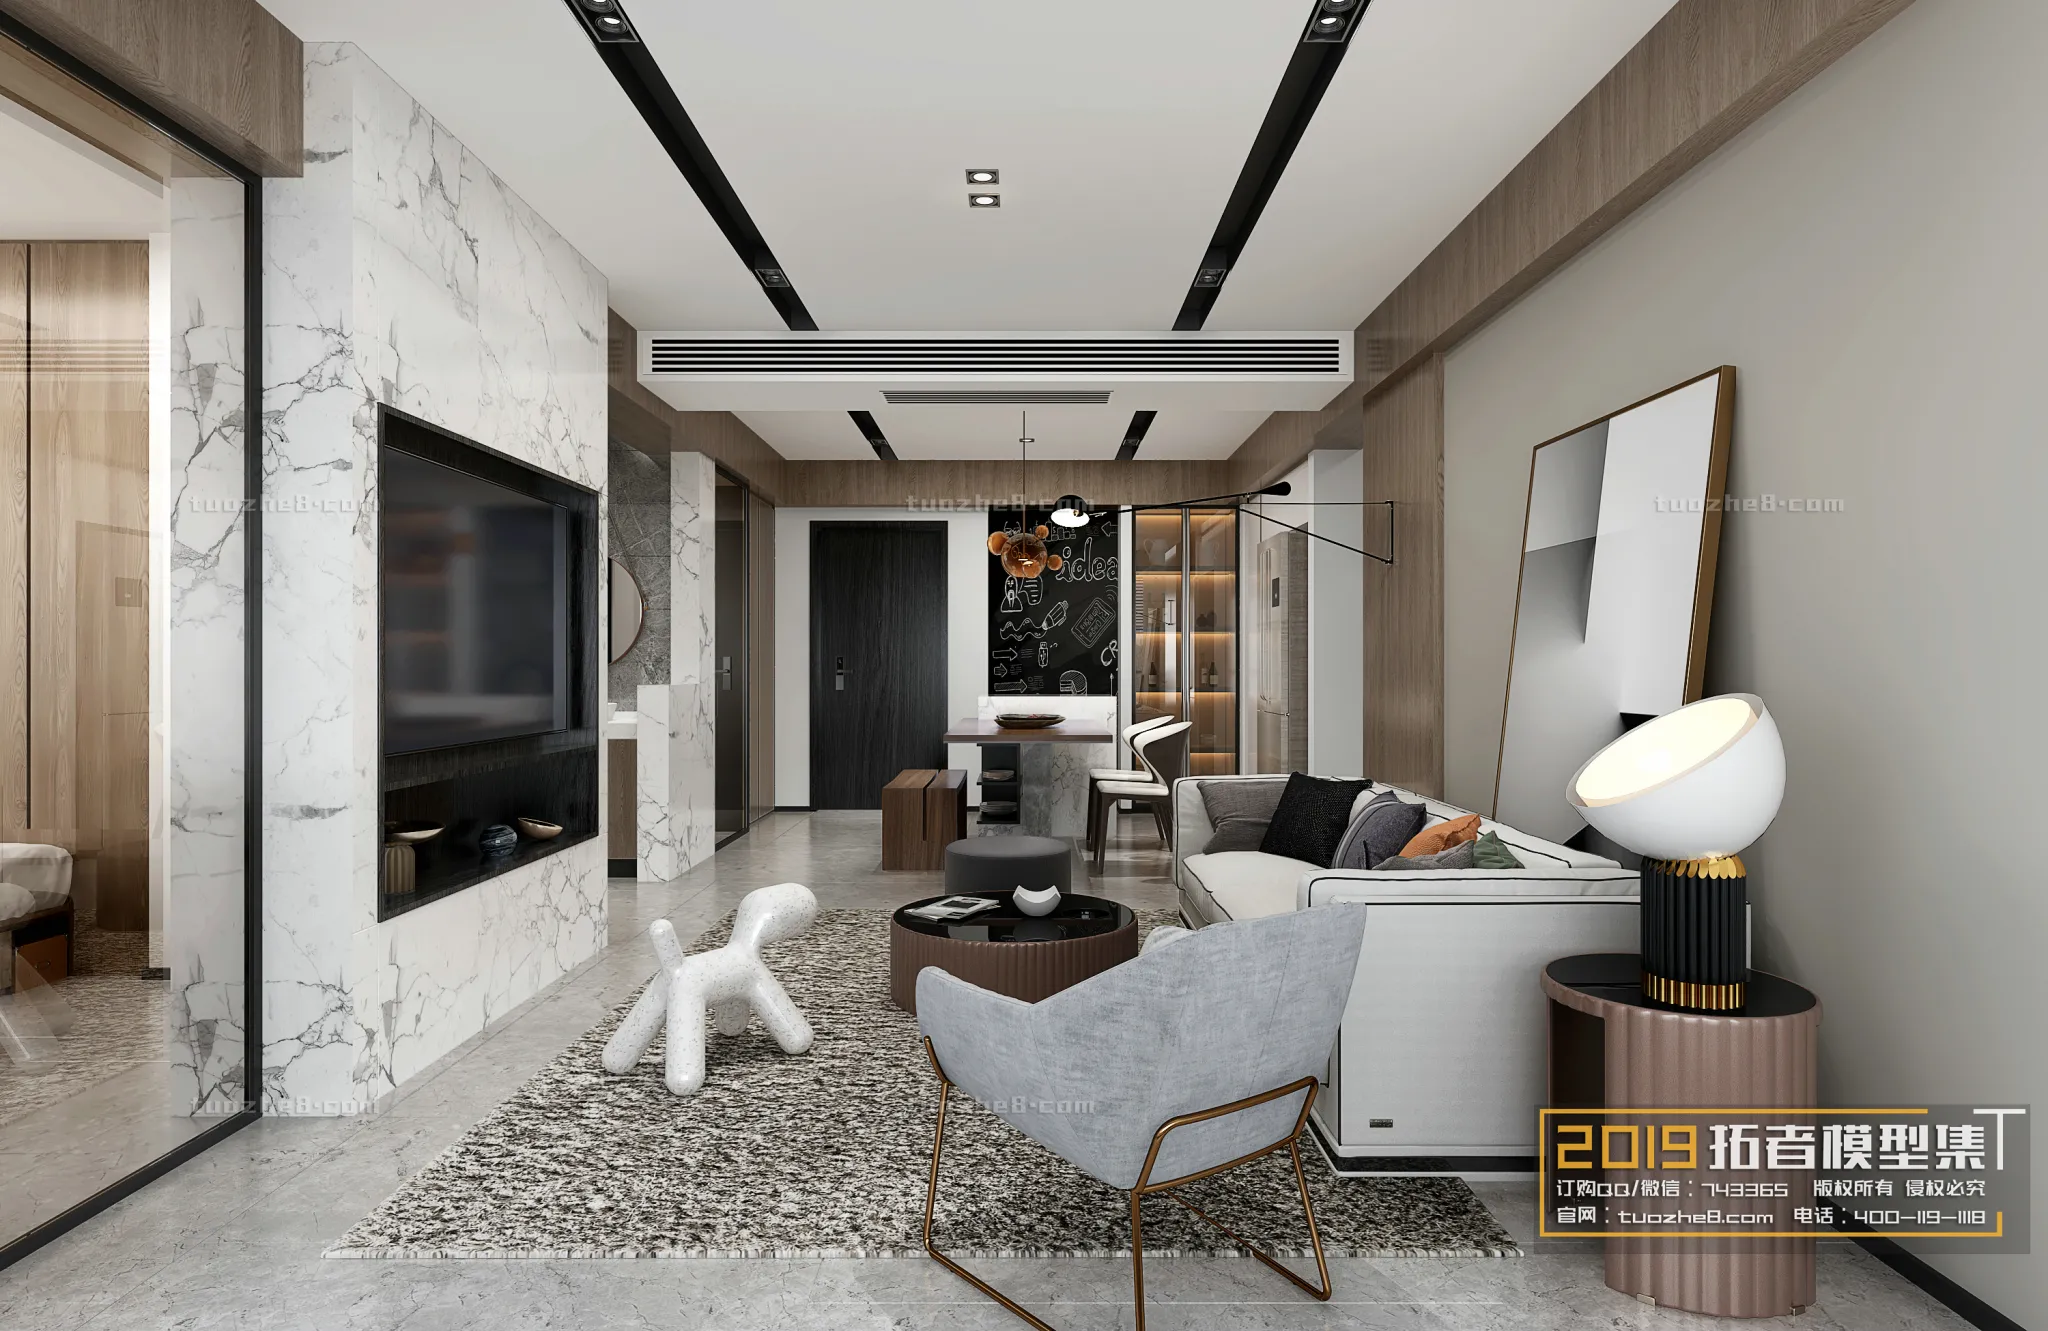 Extension Interior – LINGVING ROOM – MODERN STYLES – 015